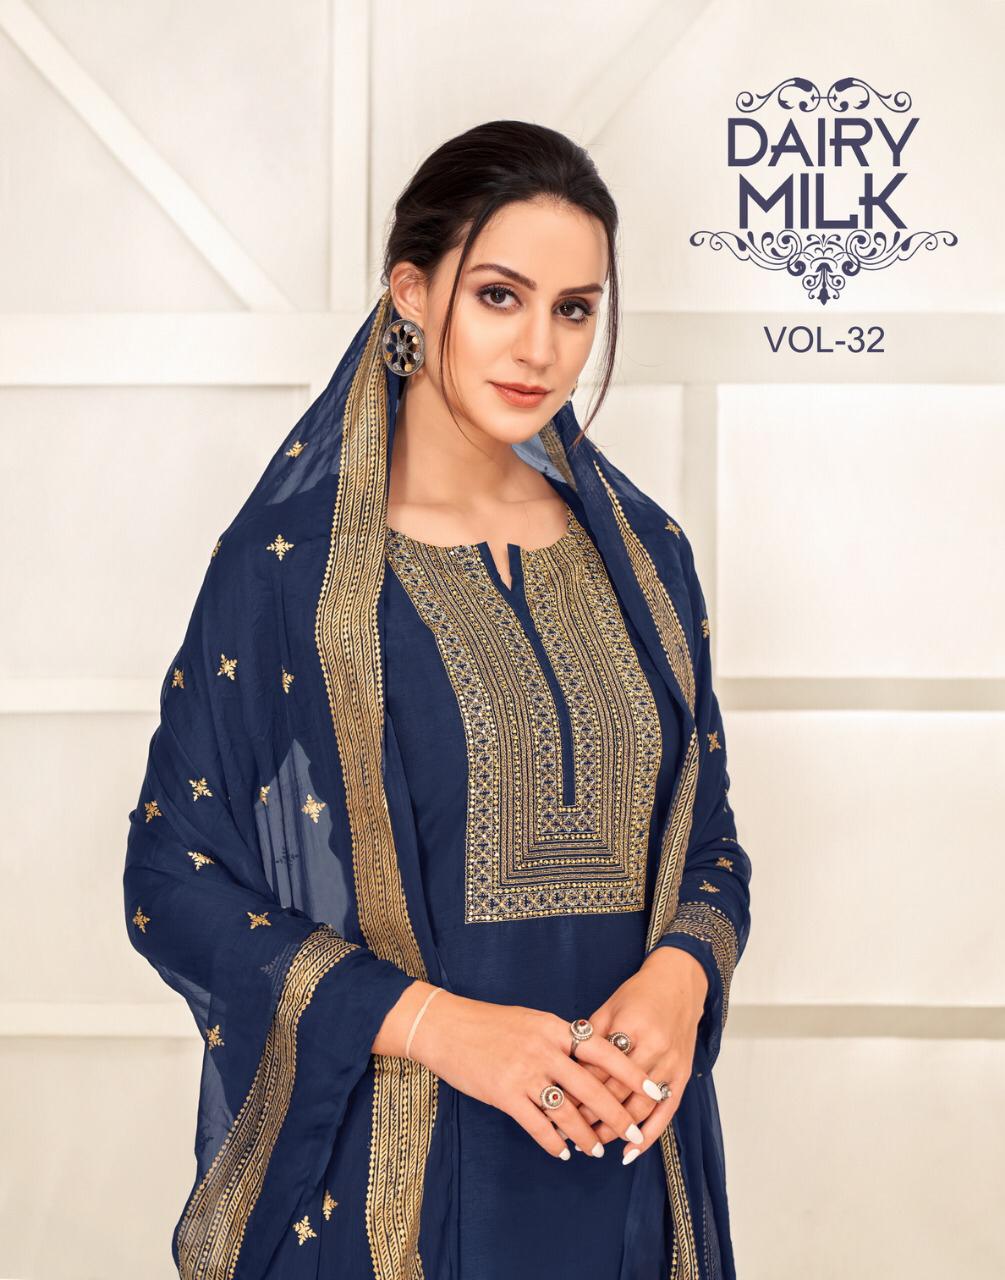 Angroop Plus Dairy Milk Vol 32 Cotton Reliable Price Salwar Suits Catalogue